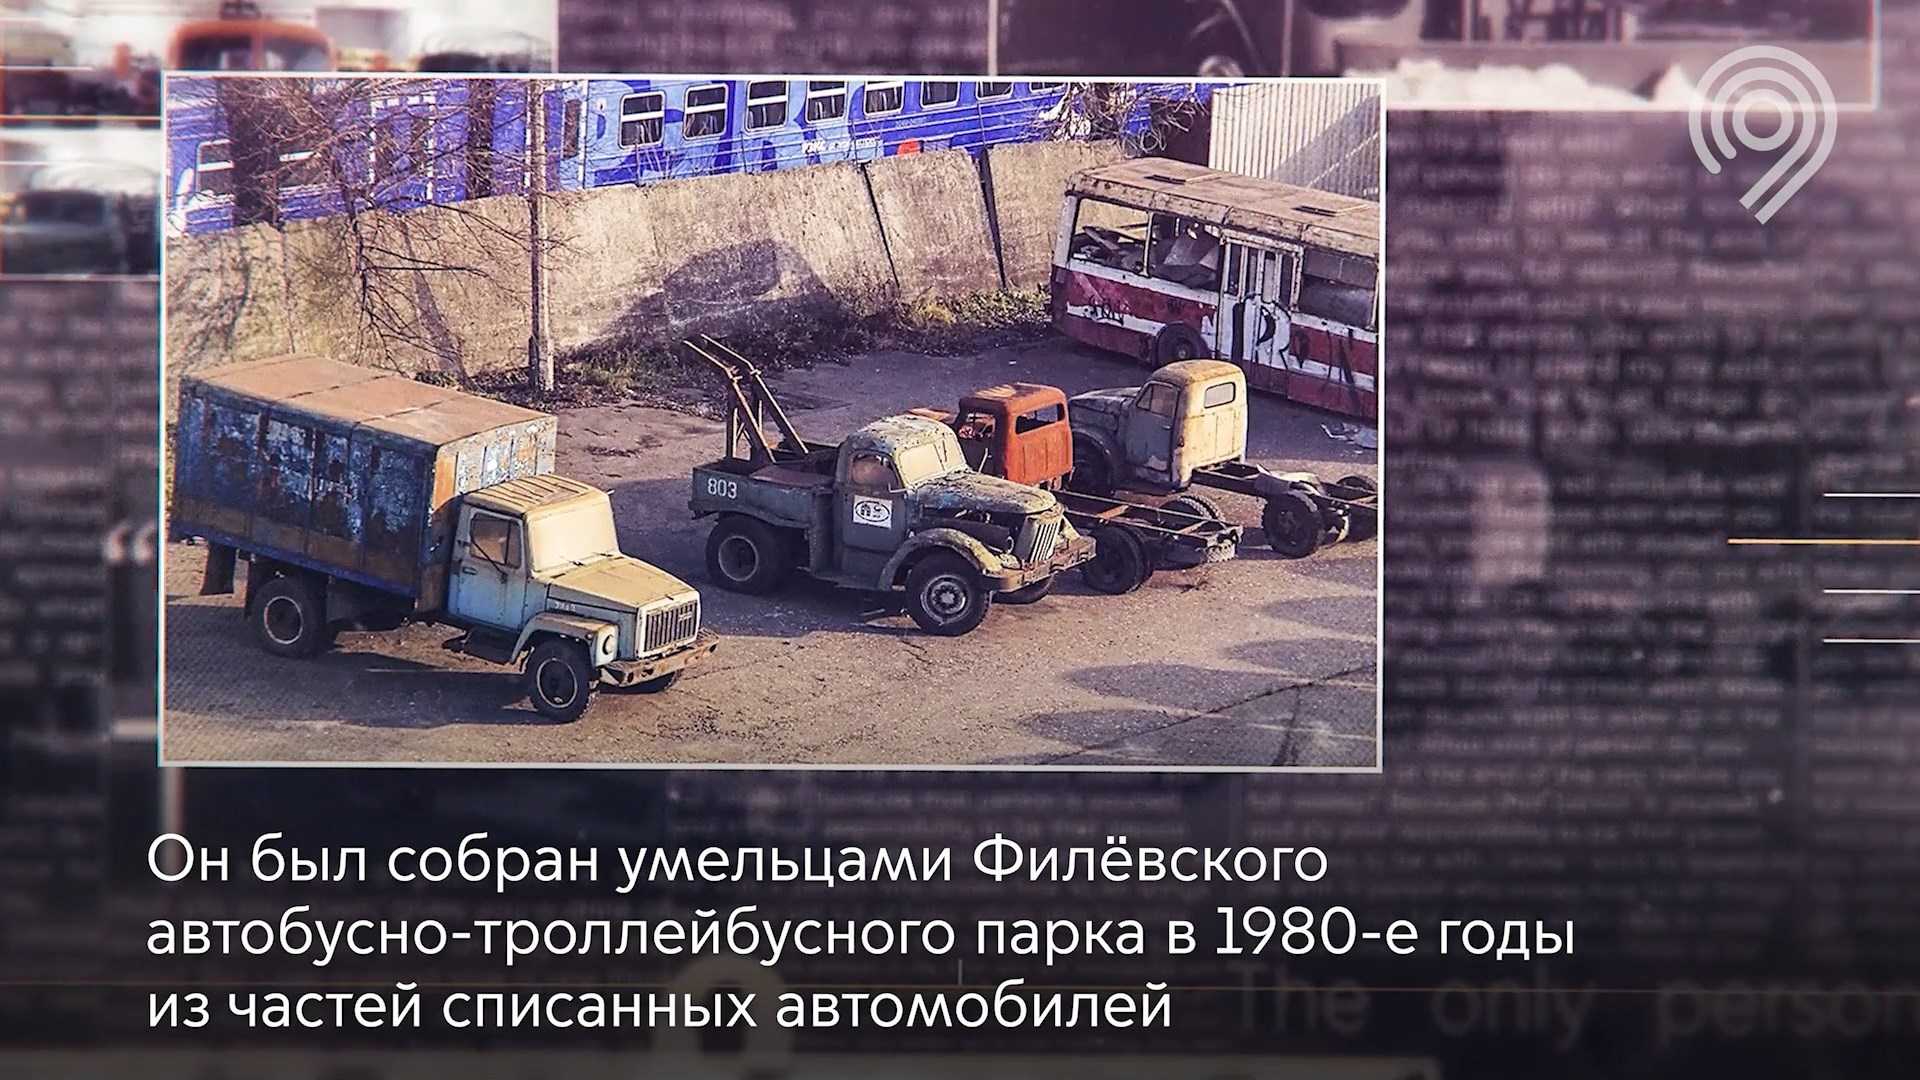 Скриншот видео <a href="https://vk.com/wall-96196967_176500" class="io-leave-page _" target="_blank">Дептранса Москвы</a>